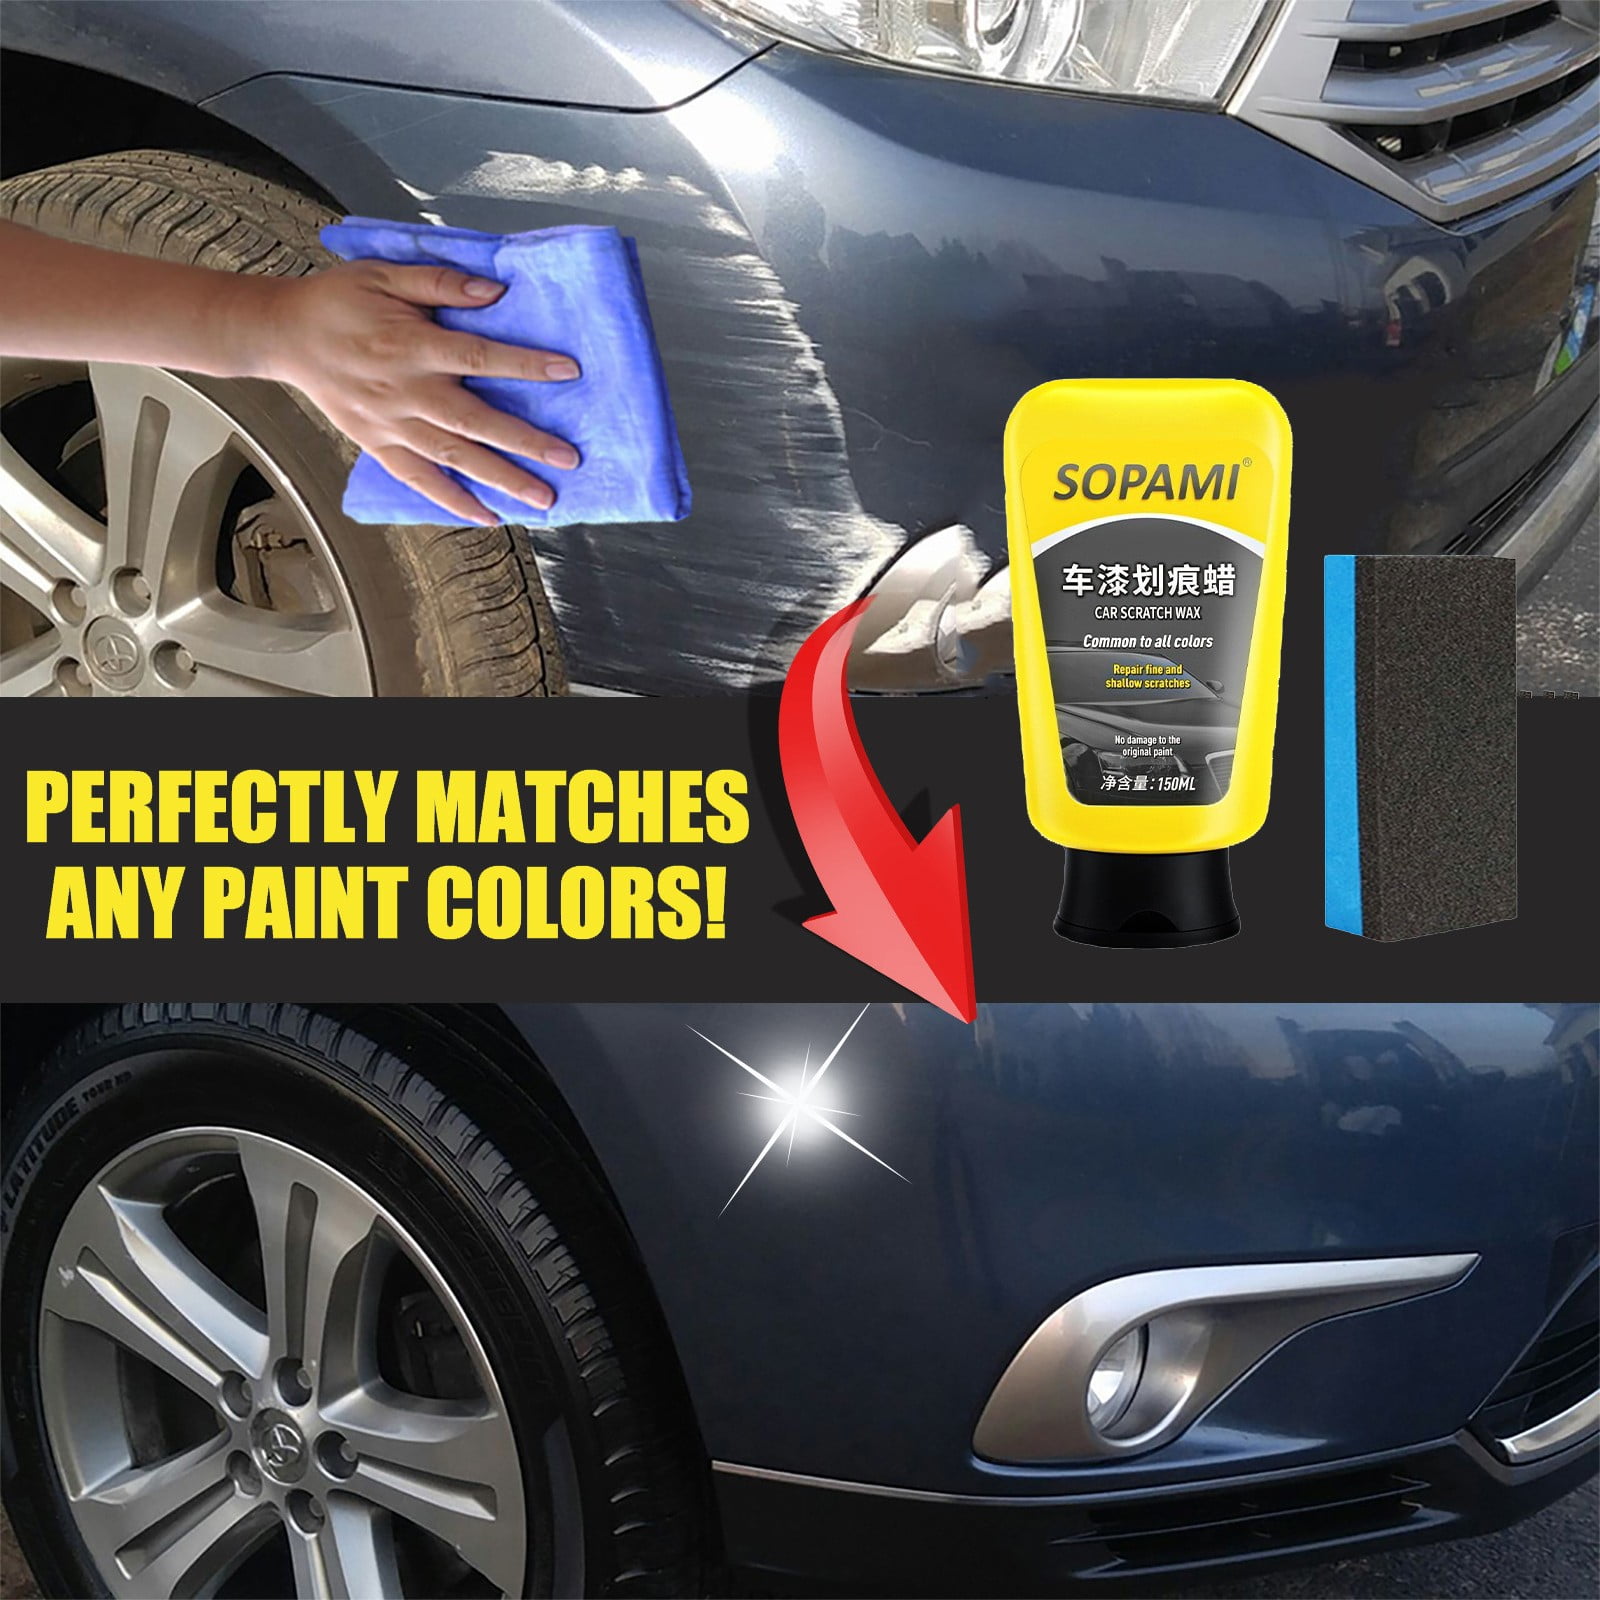 Ozmmyan Sopami Automotive Paint Scratch Wax 150ML, Nanocrystalline